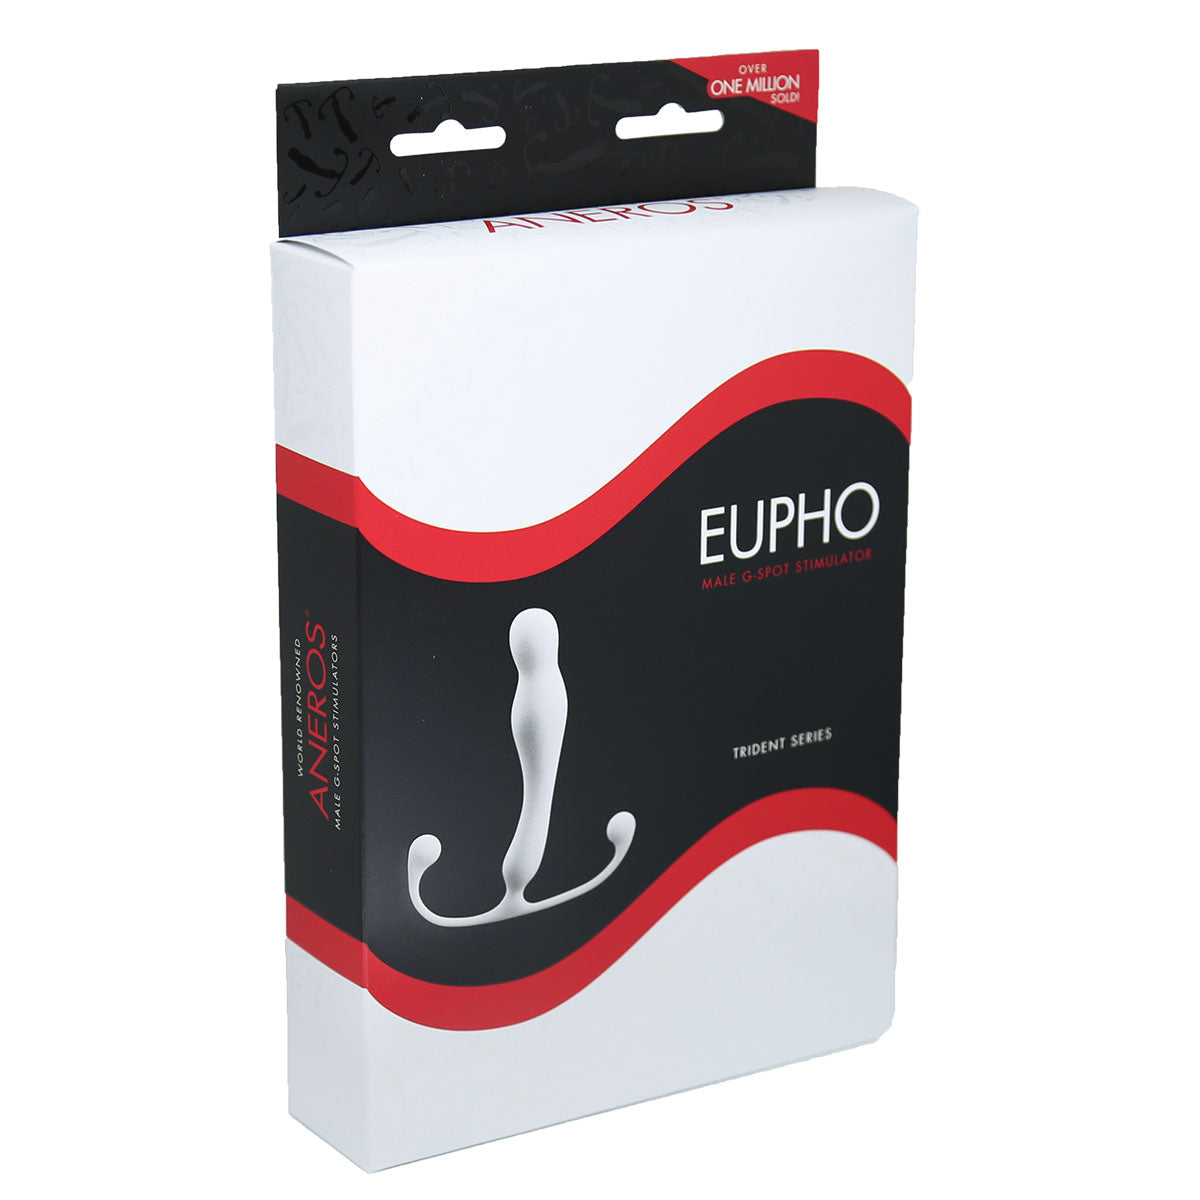 Aneros Trident Series Eupho Prostate Stimulator - Zateo Joy